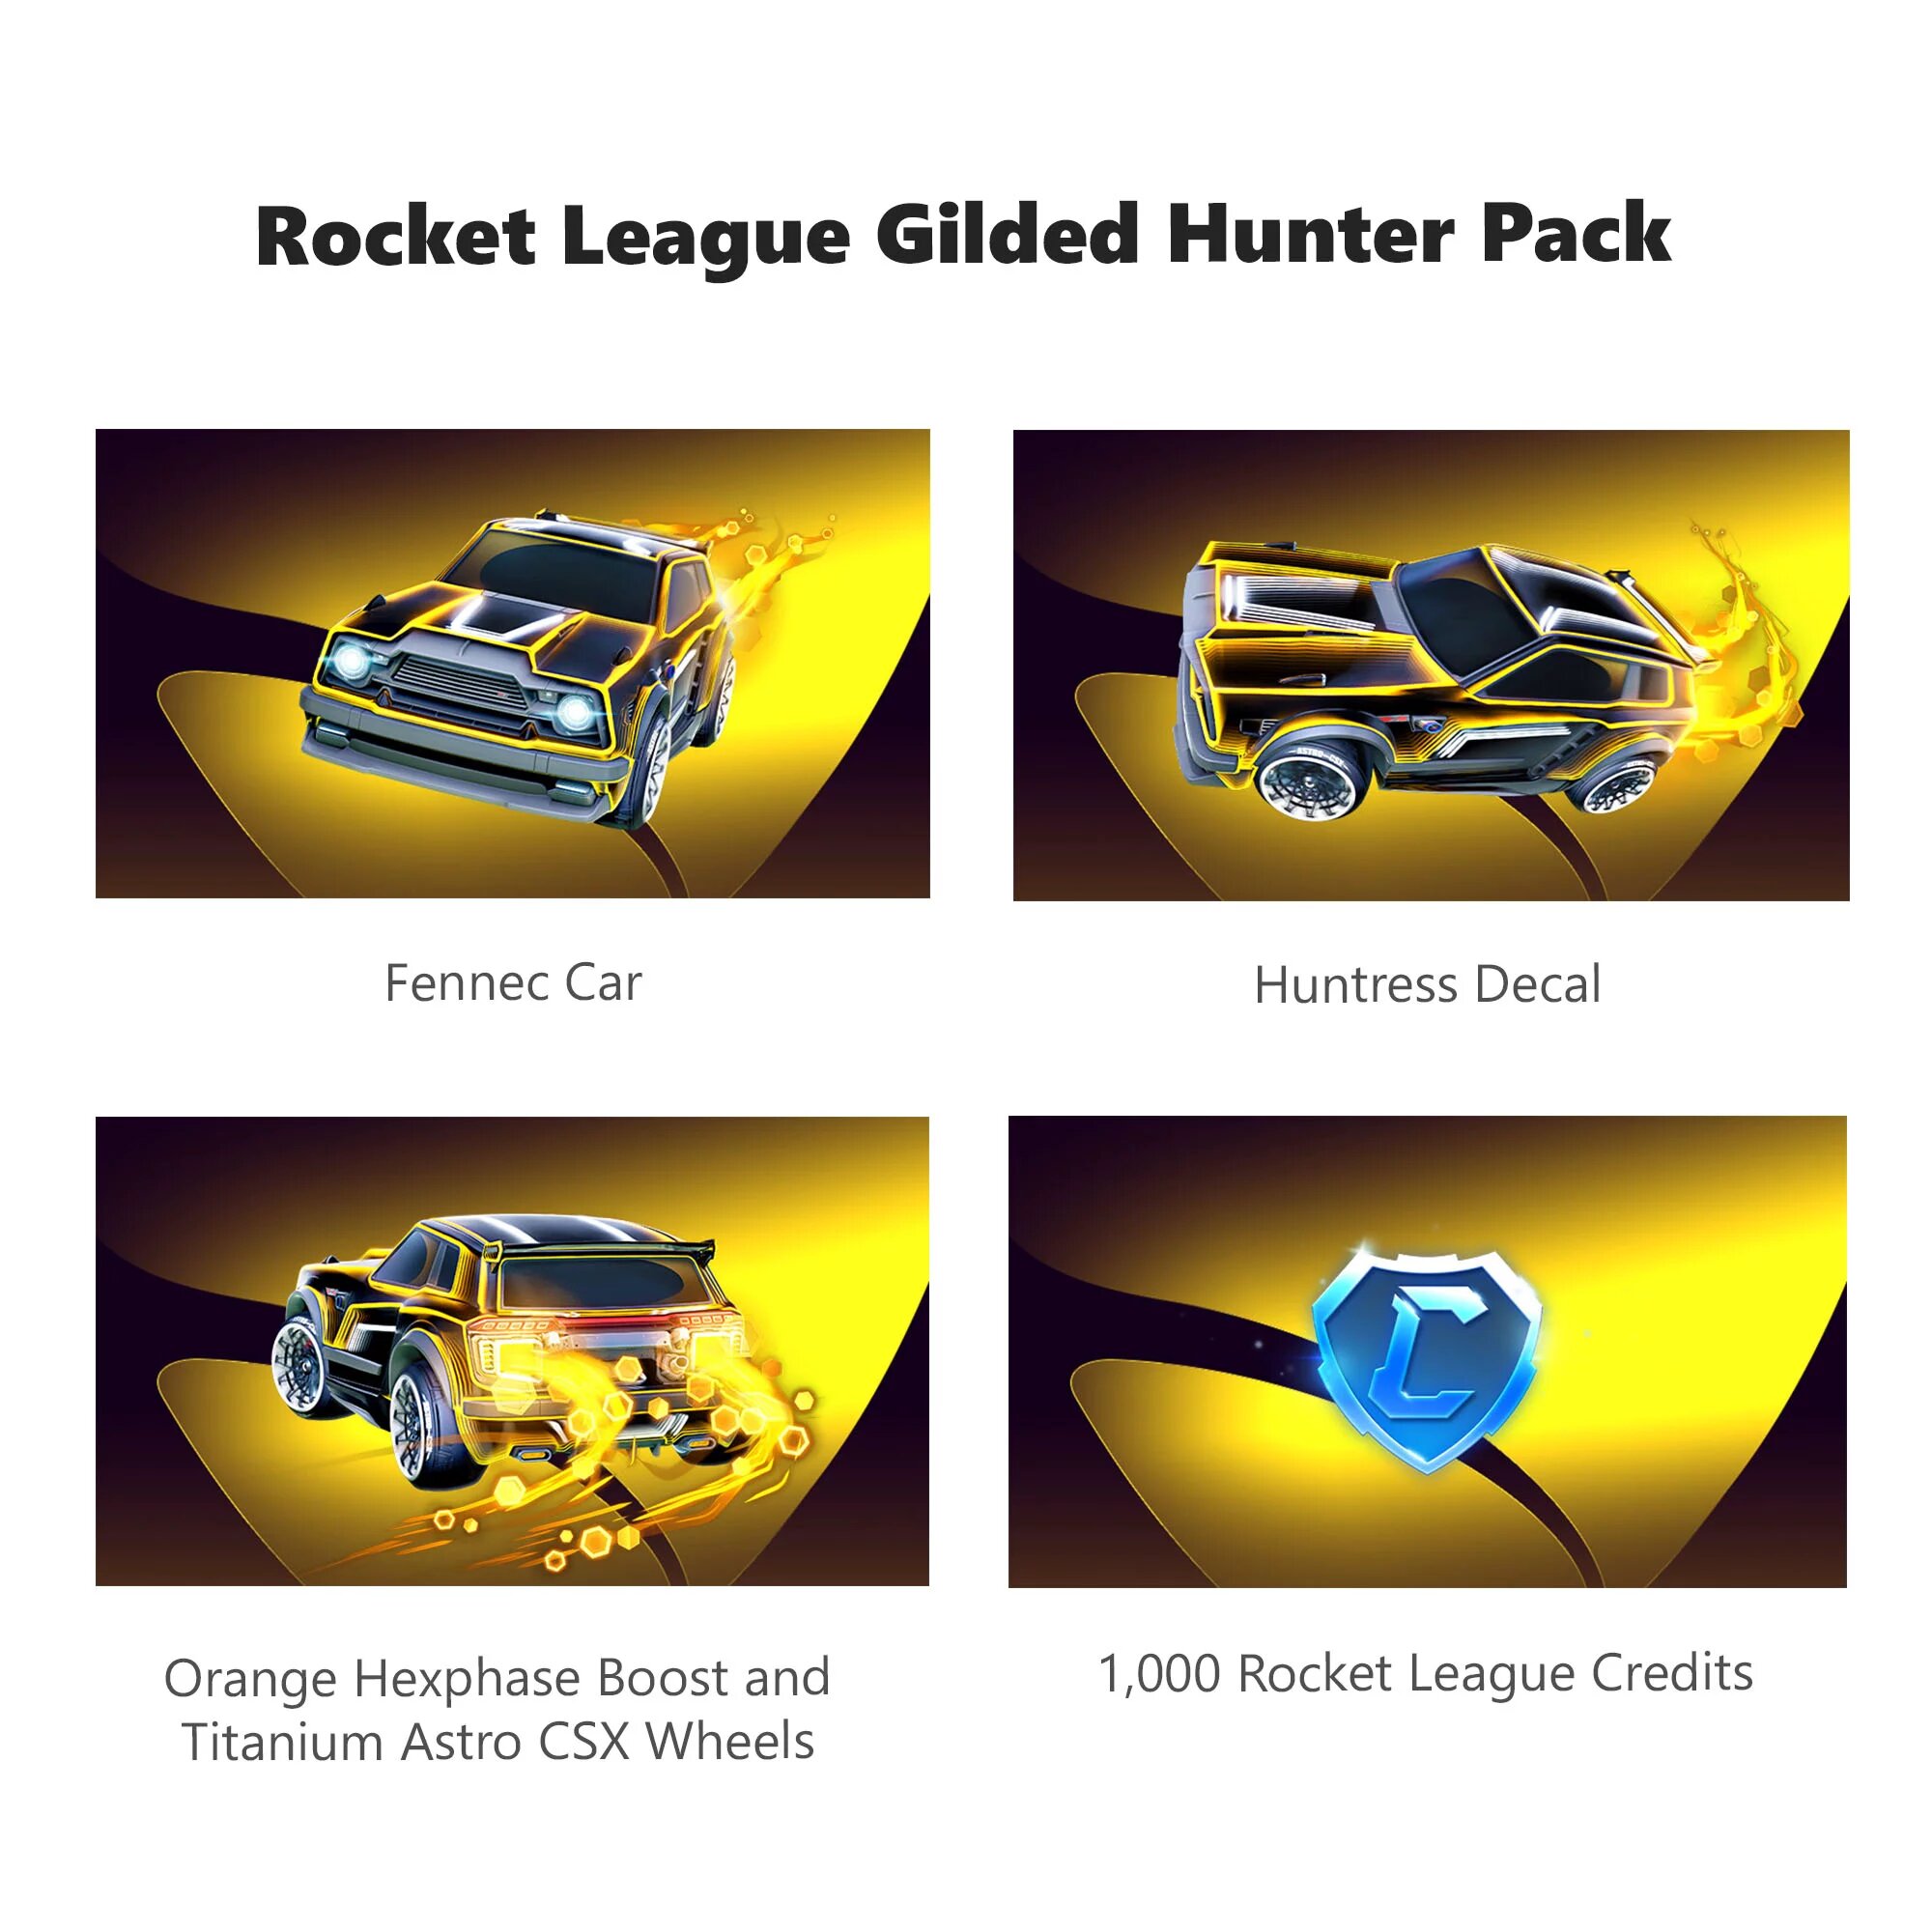 Rocket League Gilded Hunter Pack